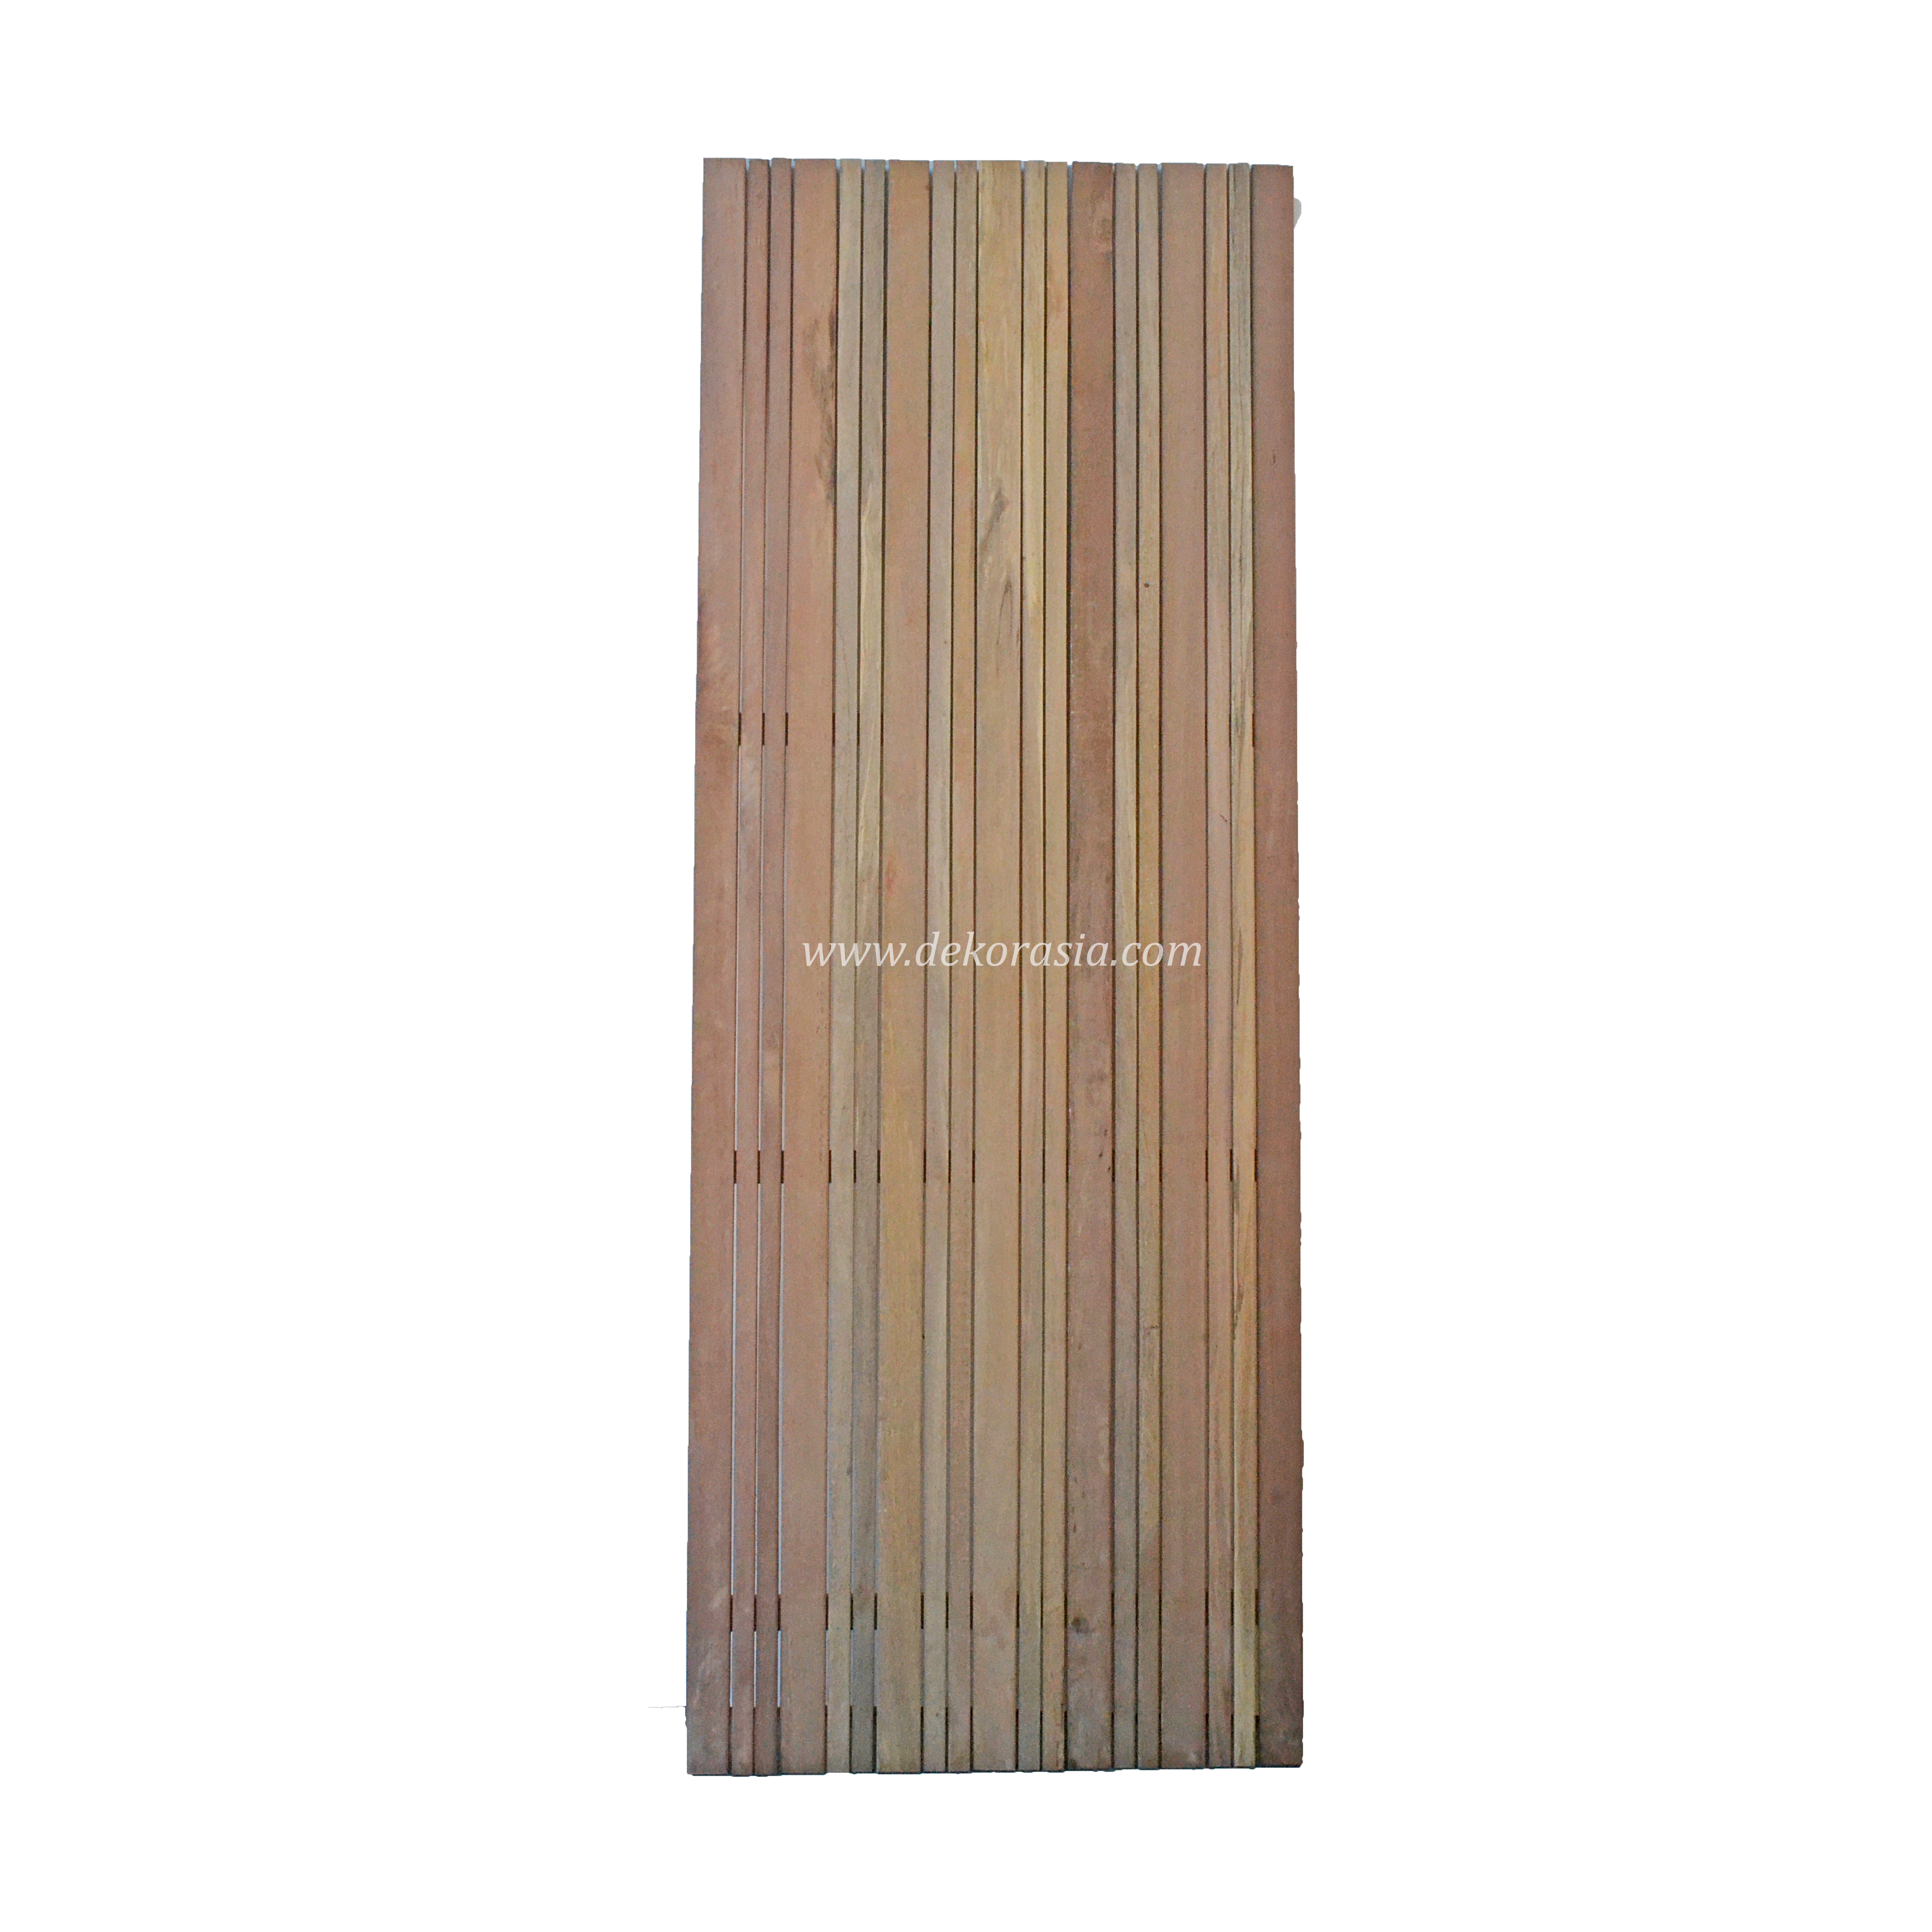 Hardwood Screening Timber Screens Wooden Screens, Screening Hardwood Floors, Merbau for Indoor & Outdoor